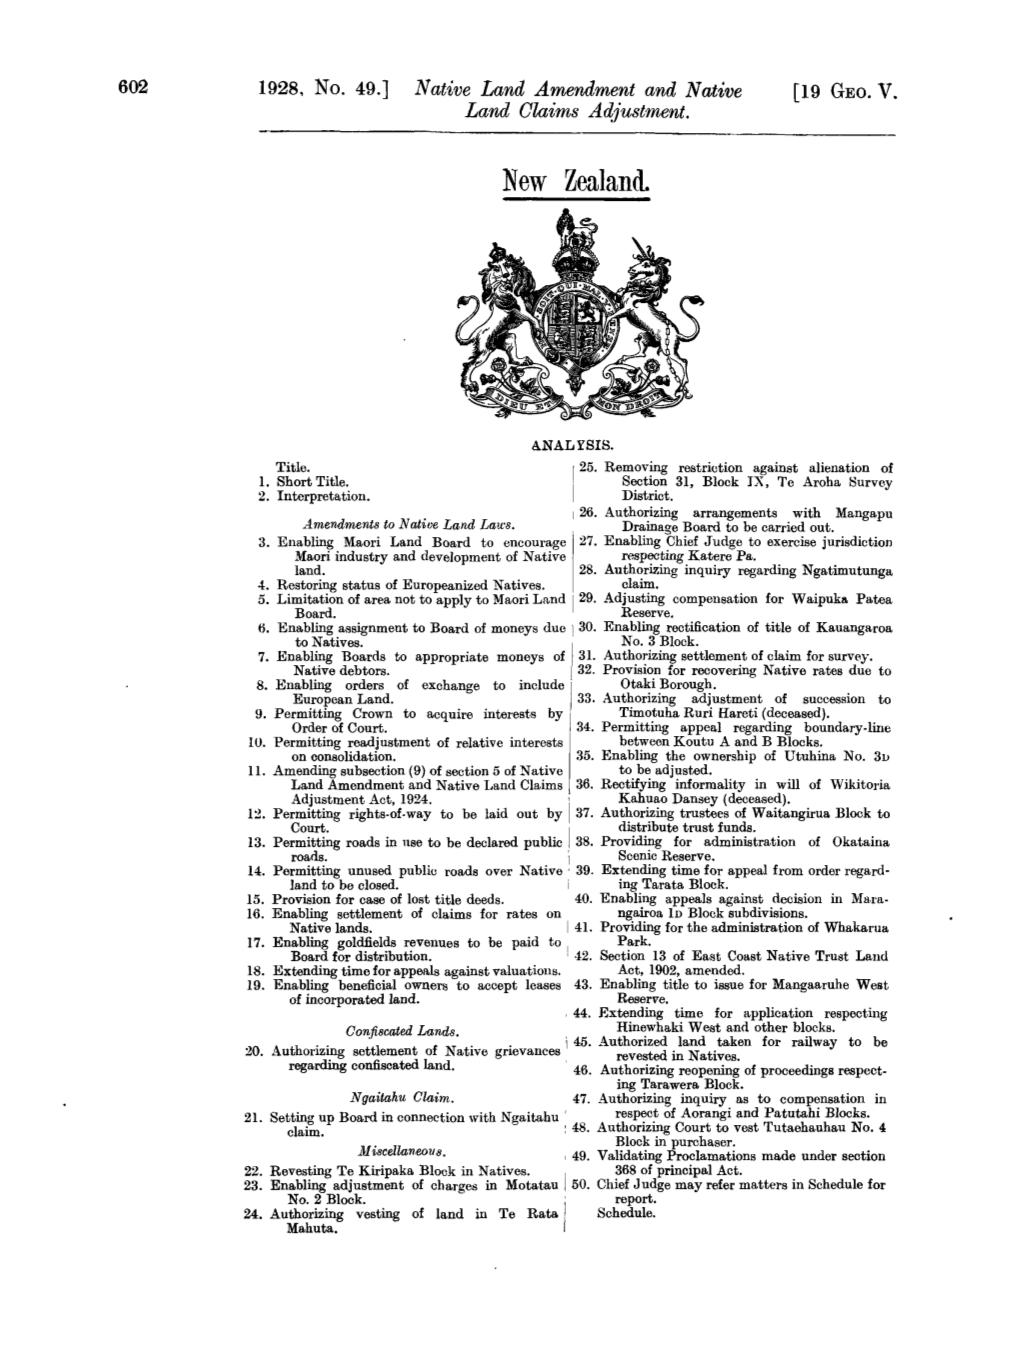 19 GEO V 1928 No 49 Native Land Amendment and Native Land